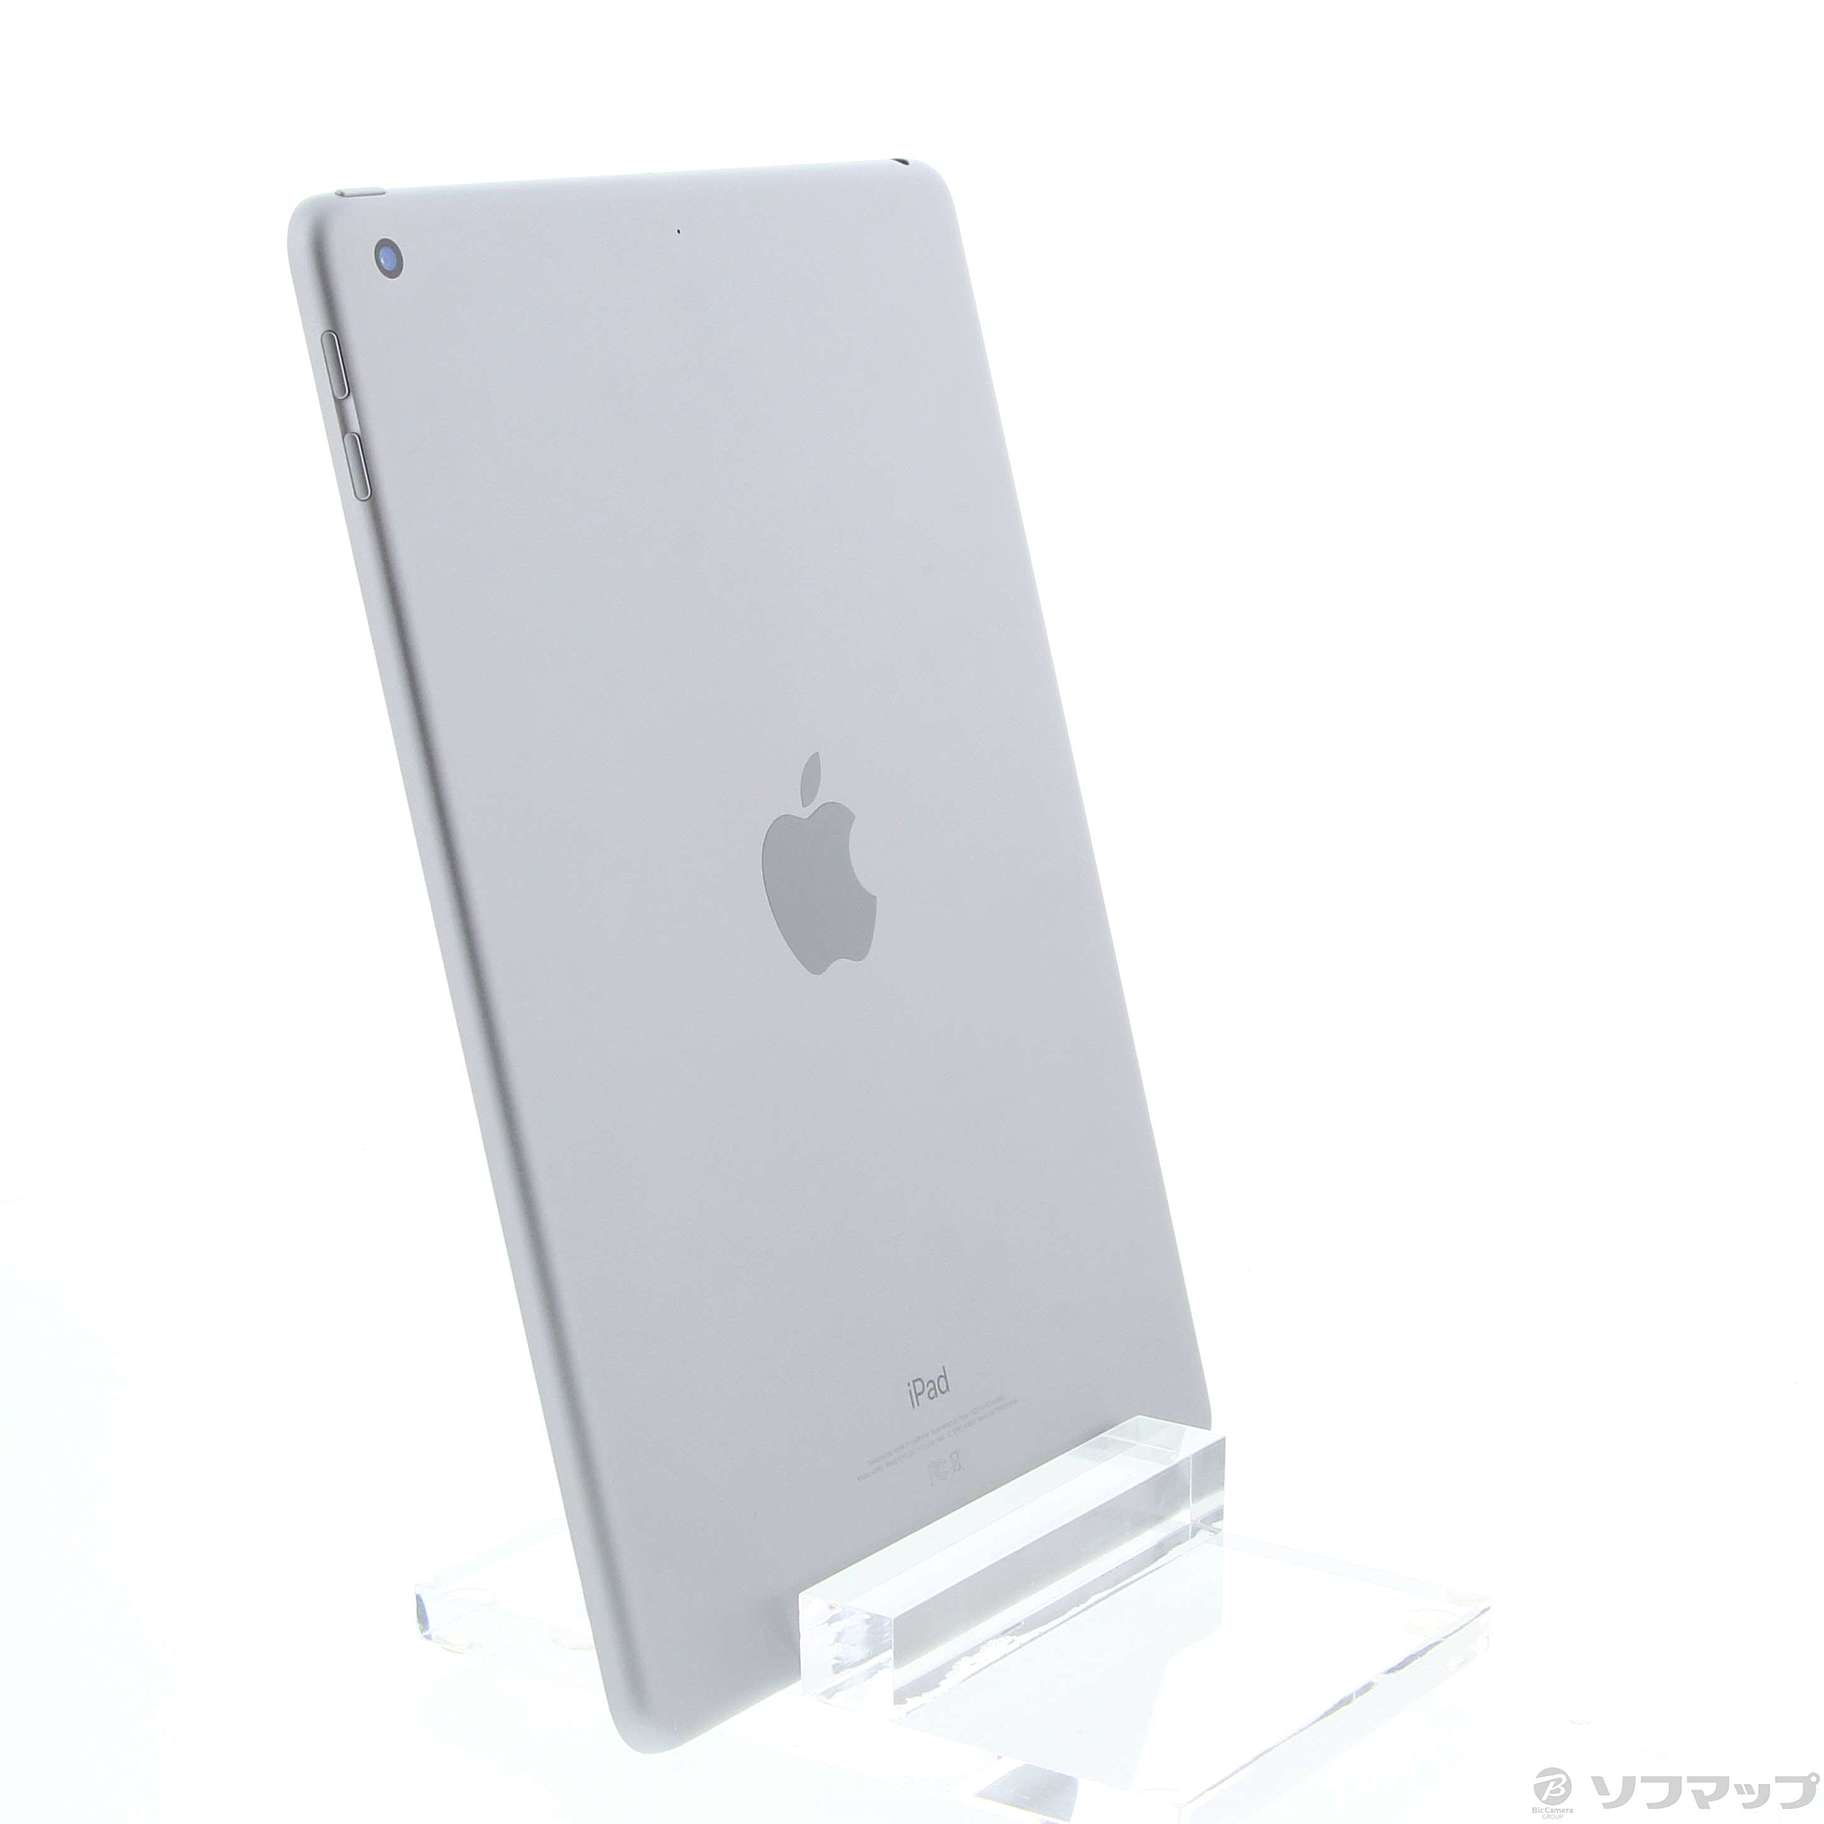 WiFi】iPad 第6世代 (128GB) スペースグレー-